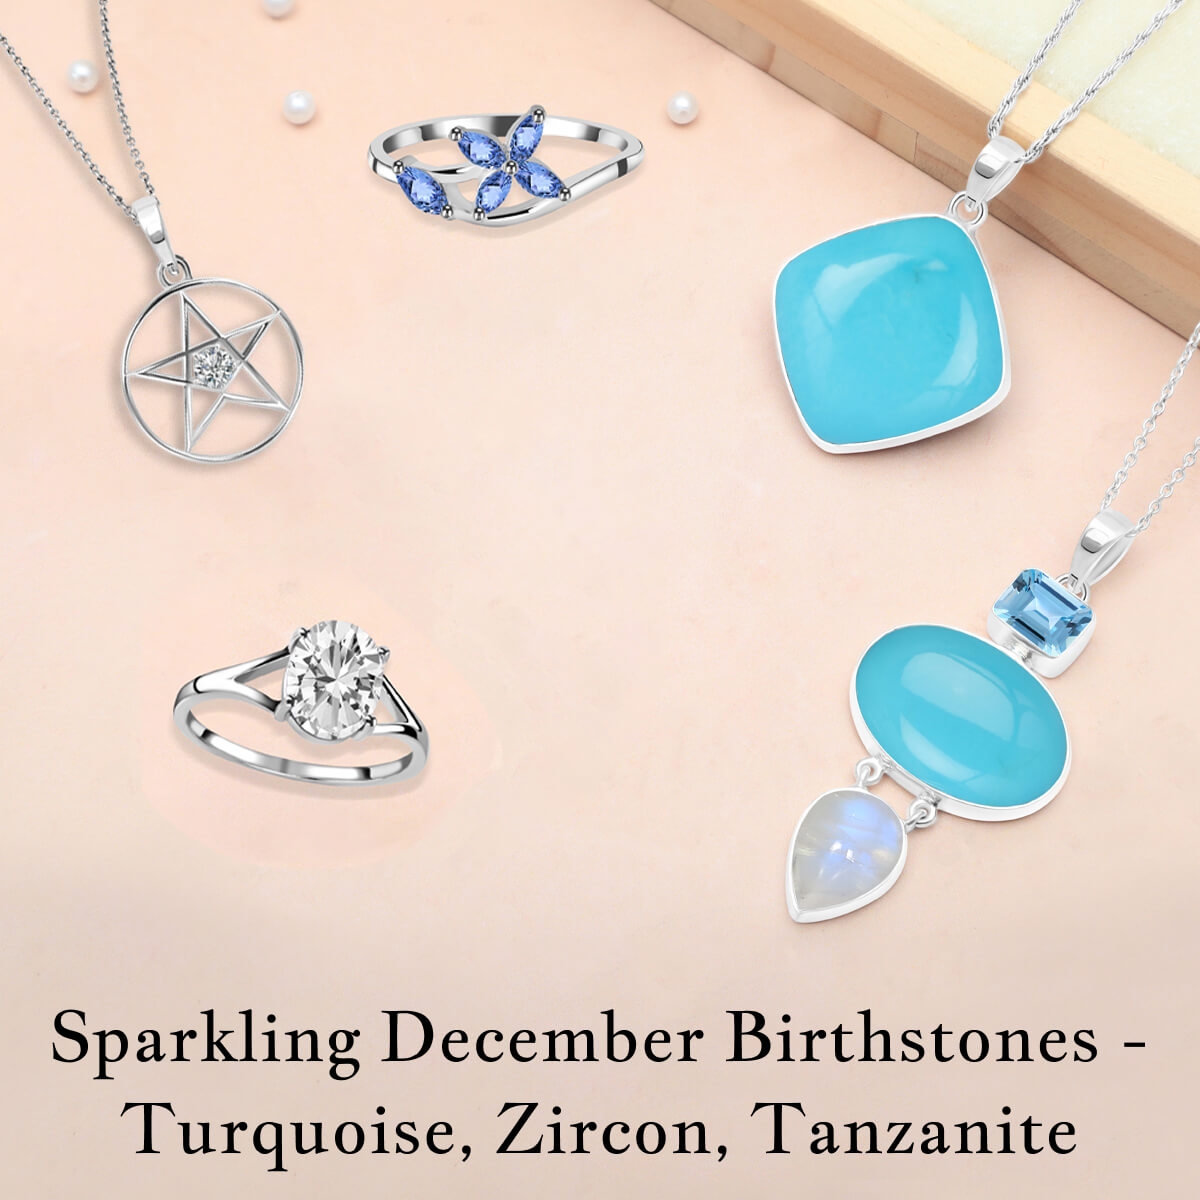 Turquoise, Zircon, and Tanzanite December Birthstones